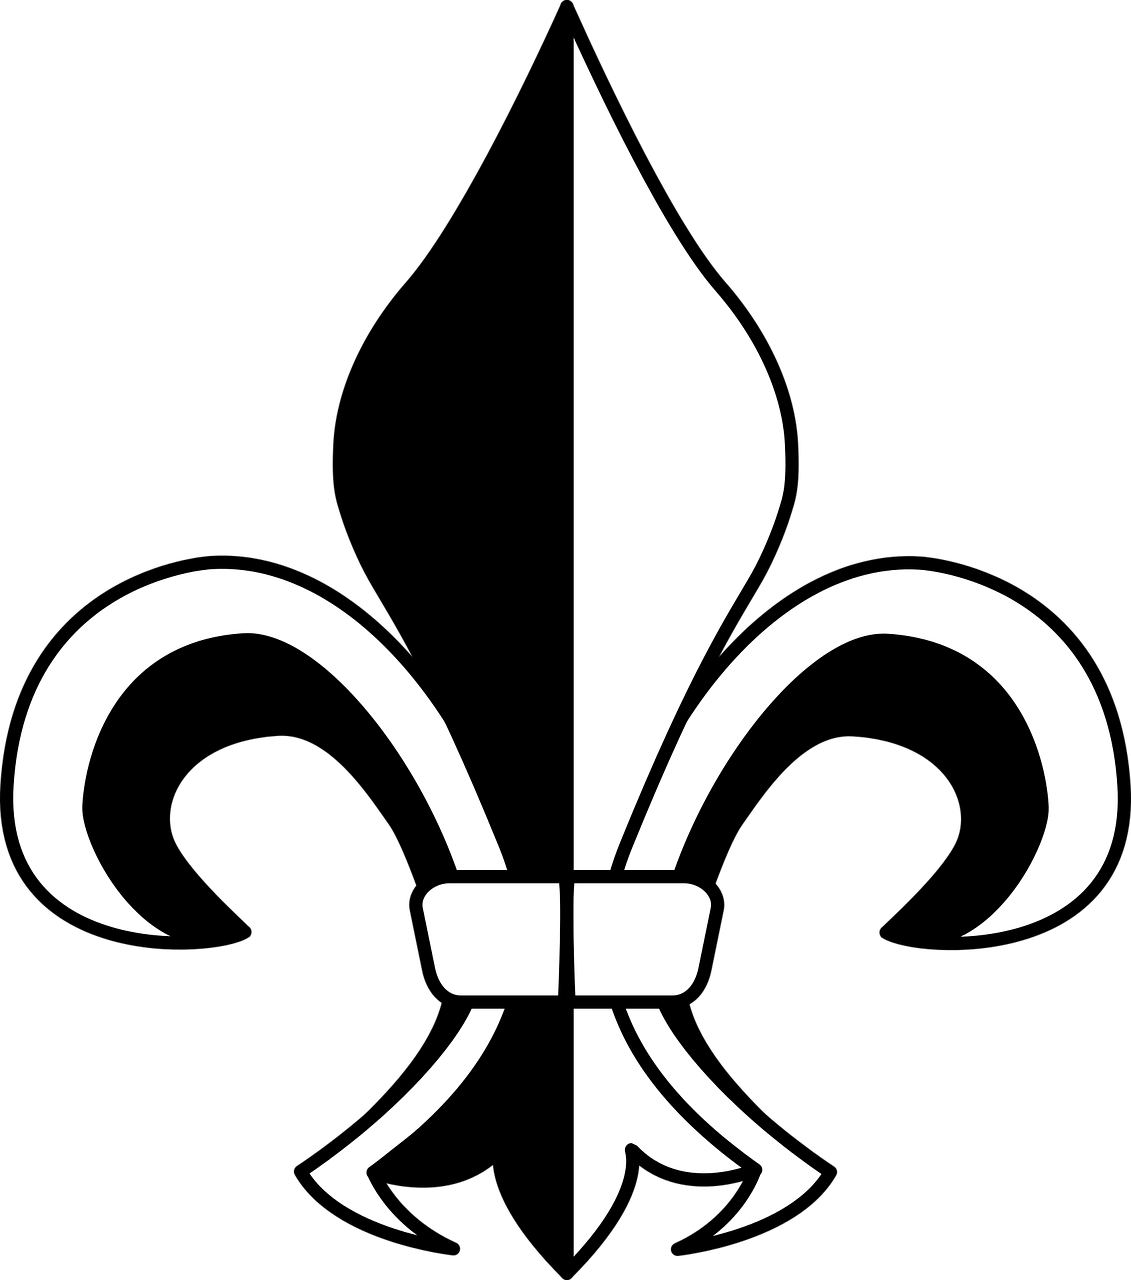 France symbol